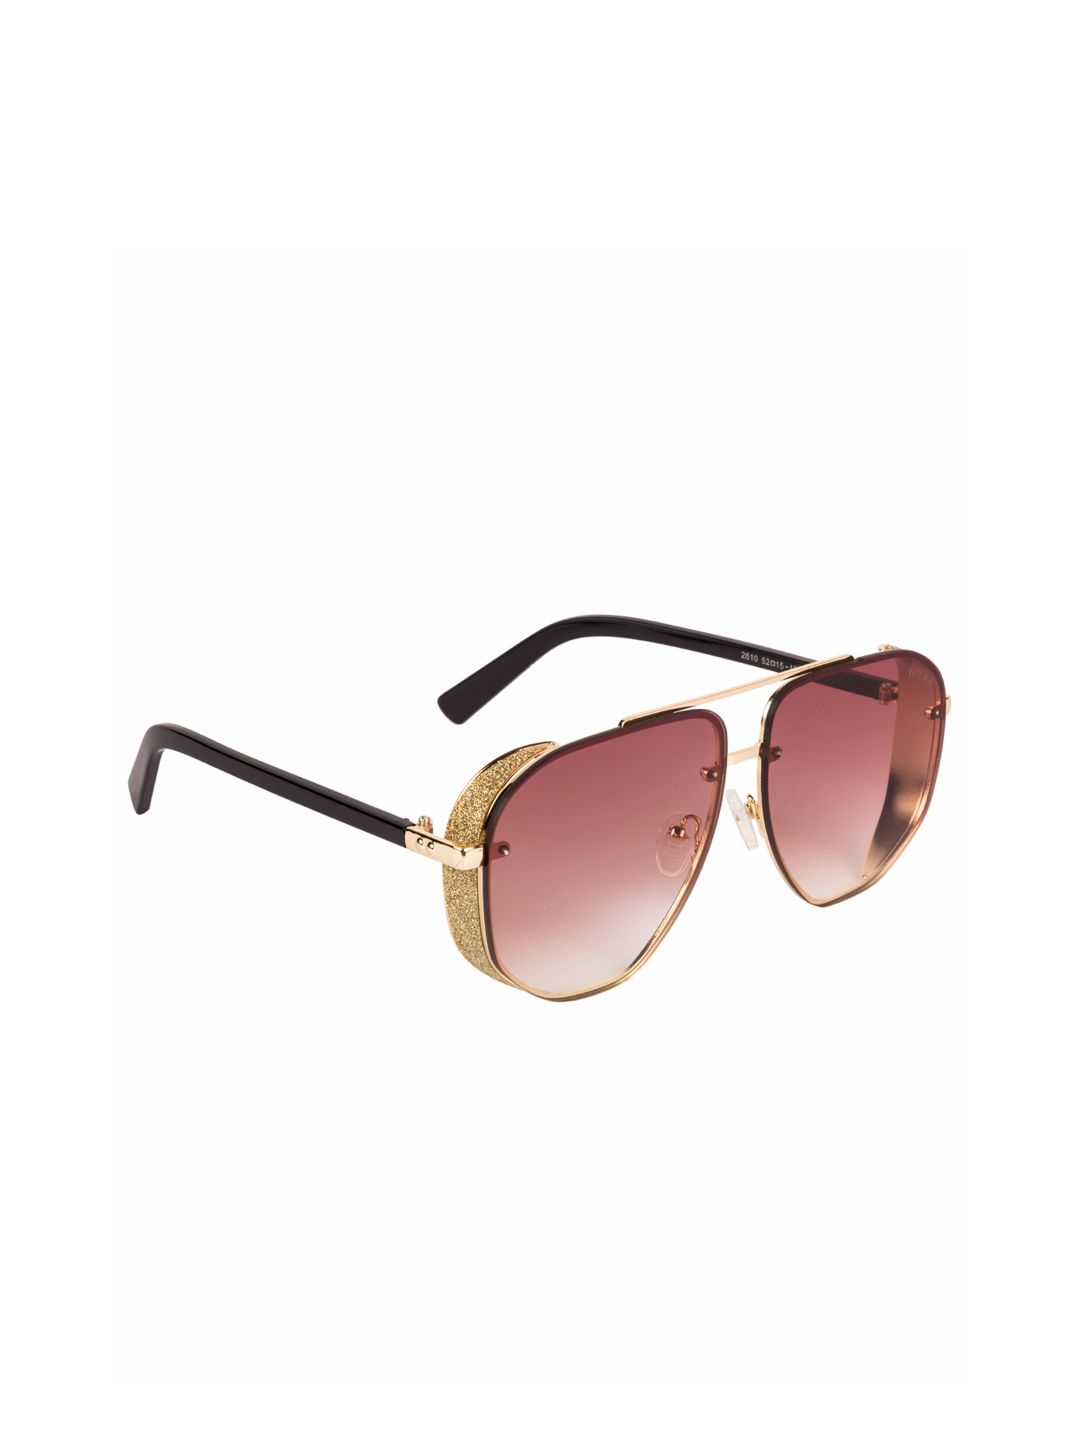 Voyage Women Square Sunglasses 2610MG2934 Price in India